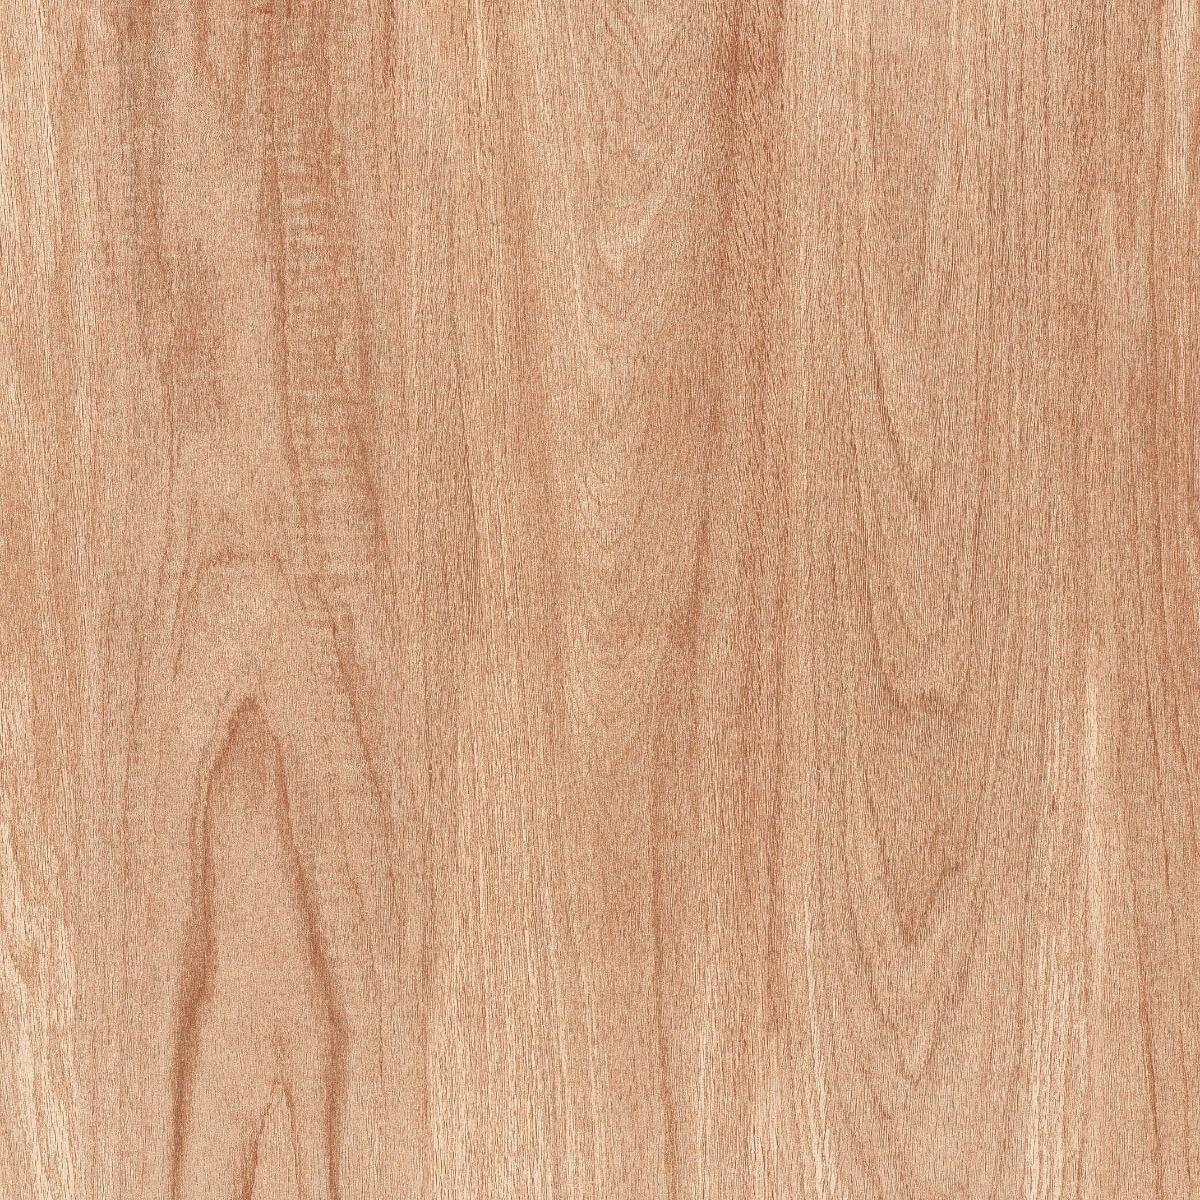 DGVT Cypress Wood Crema